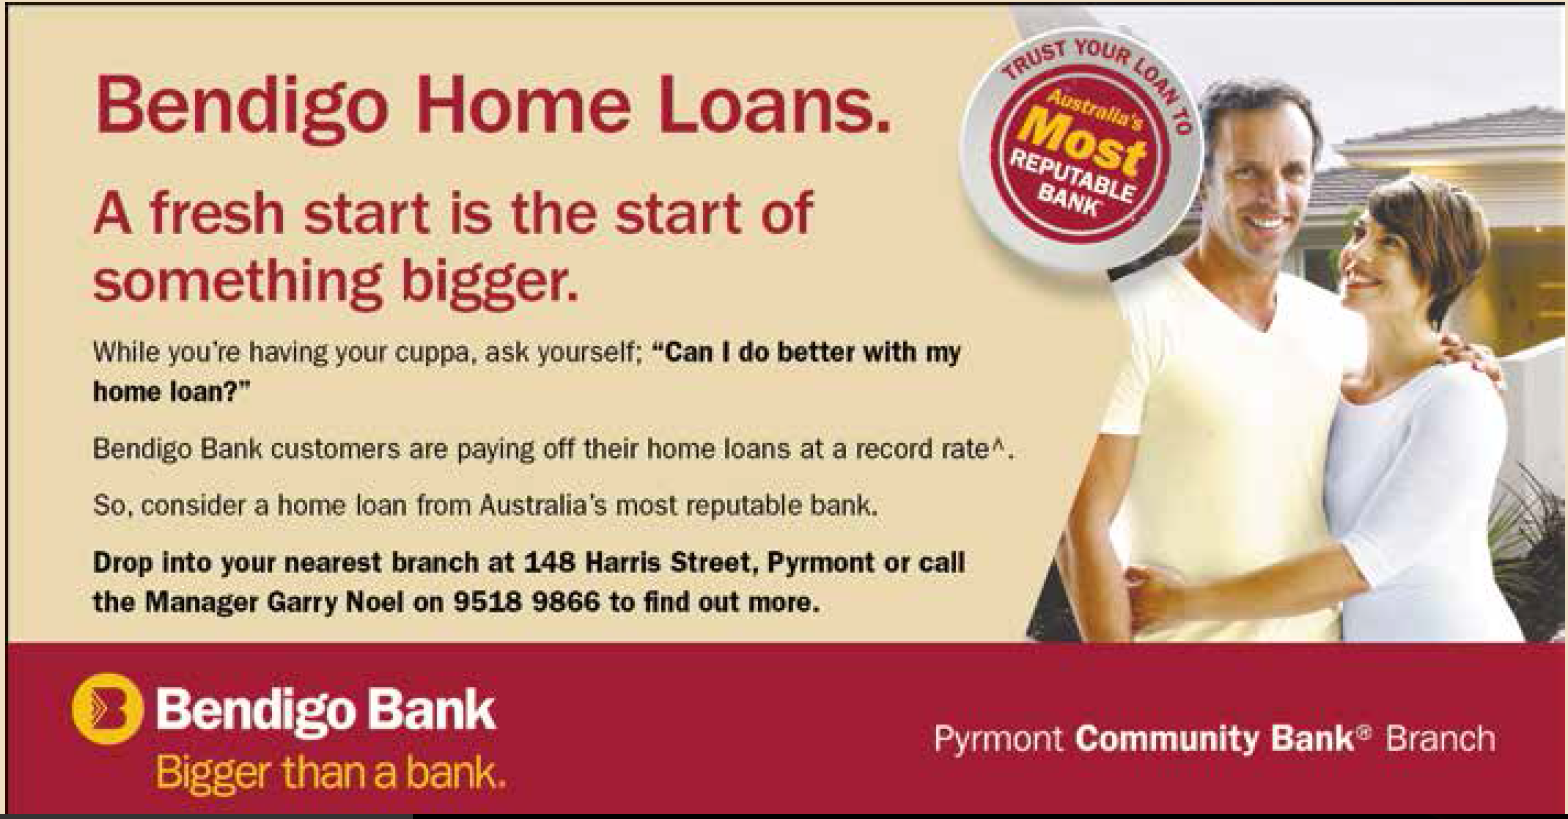 home-loans